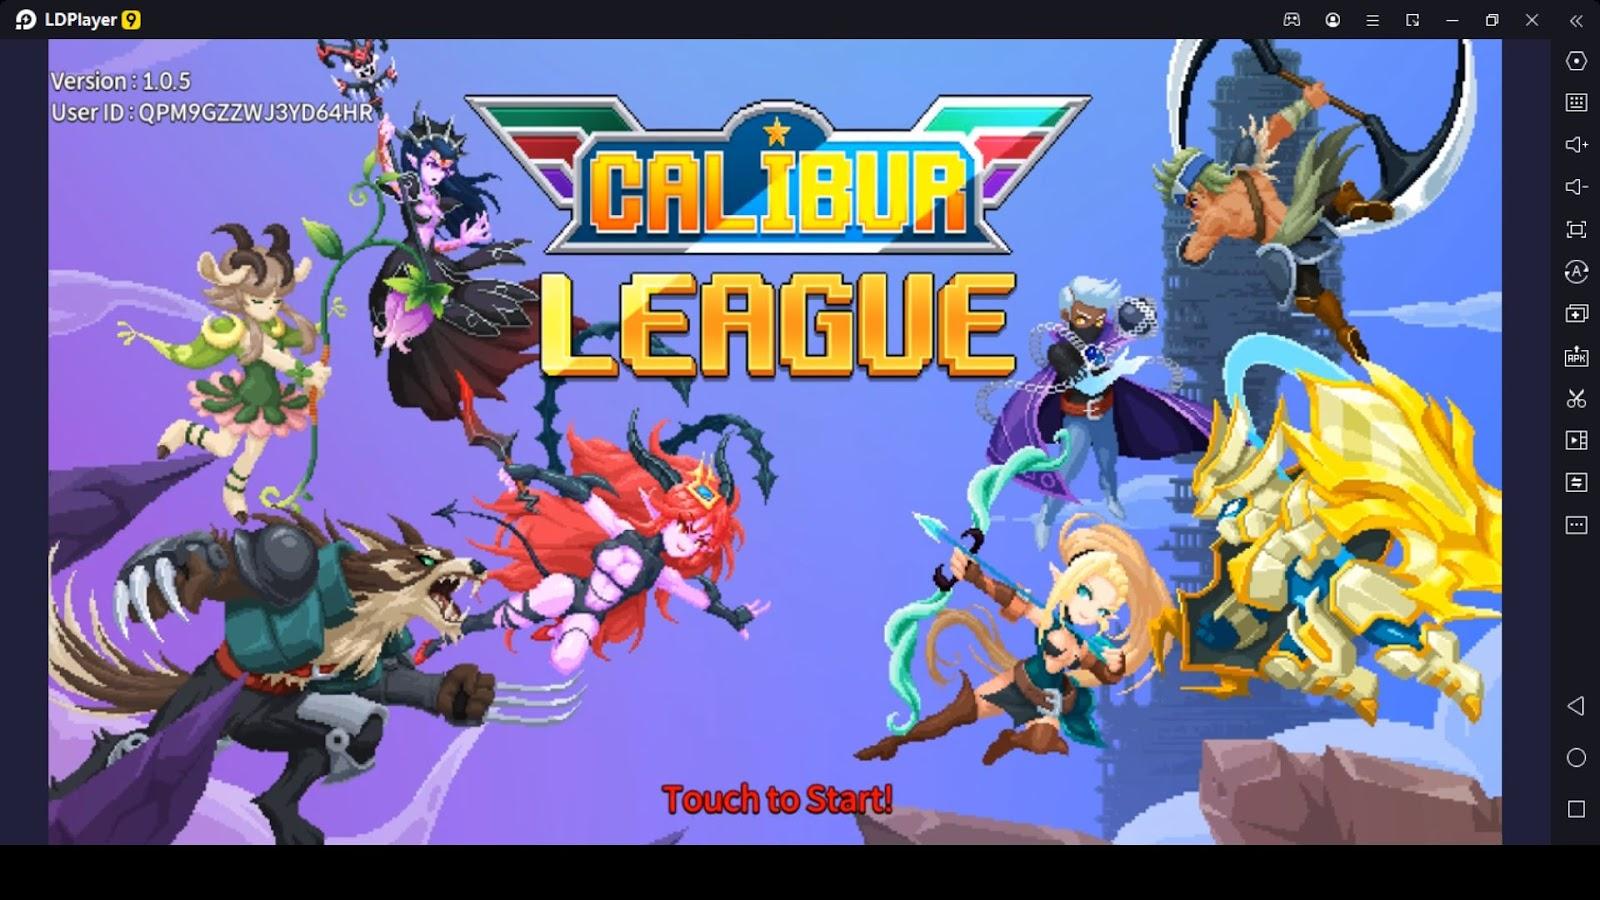 Calibur League Battling Newbie Guide with Tips